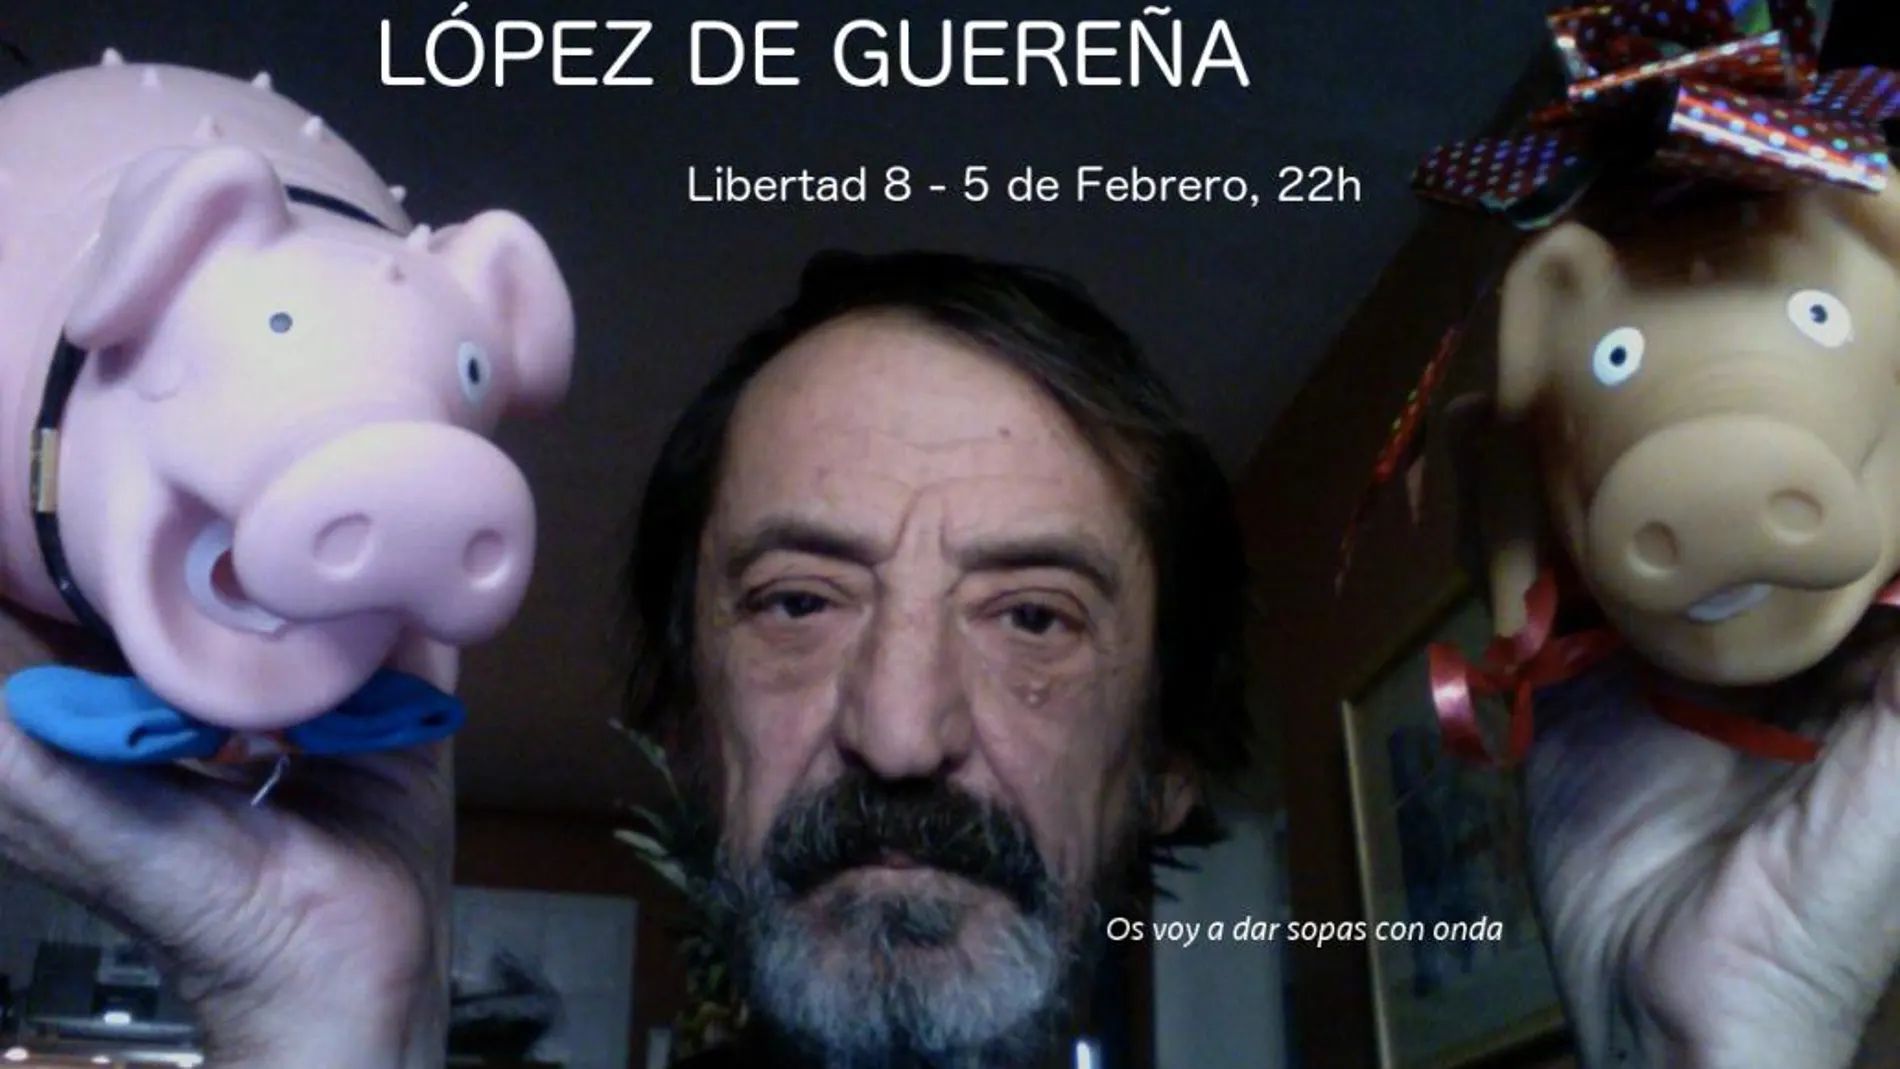 Javier López de Guereña, imprescindible canción en primera persona